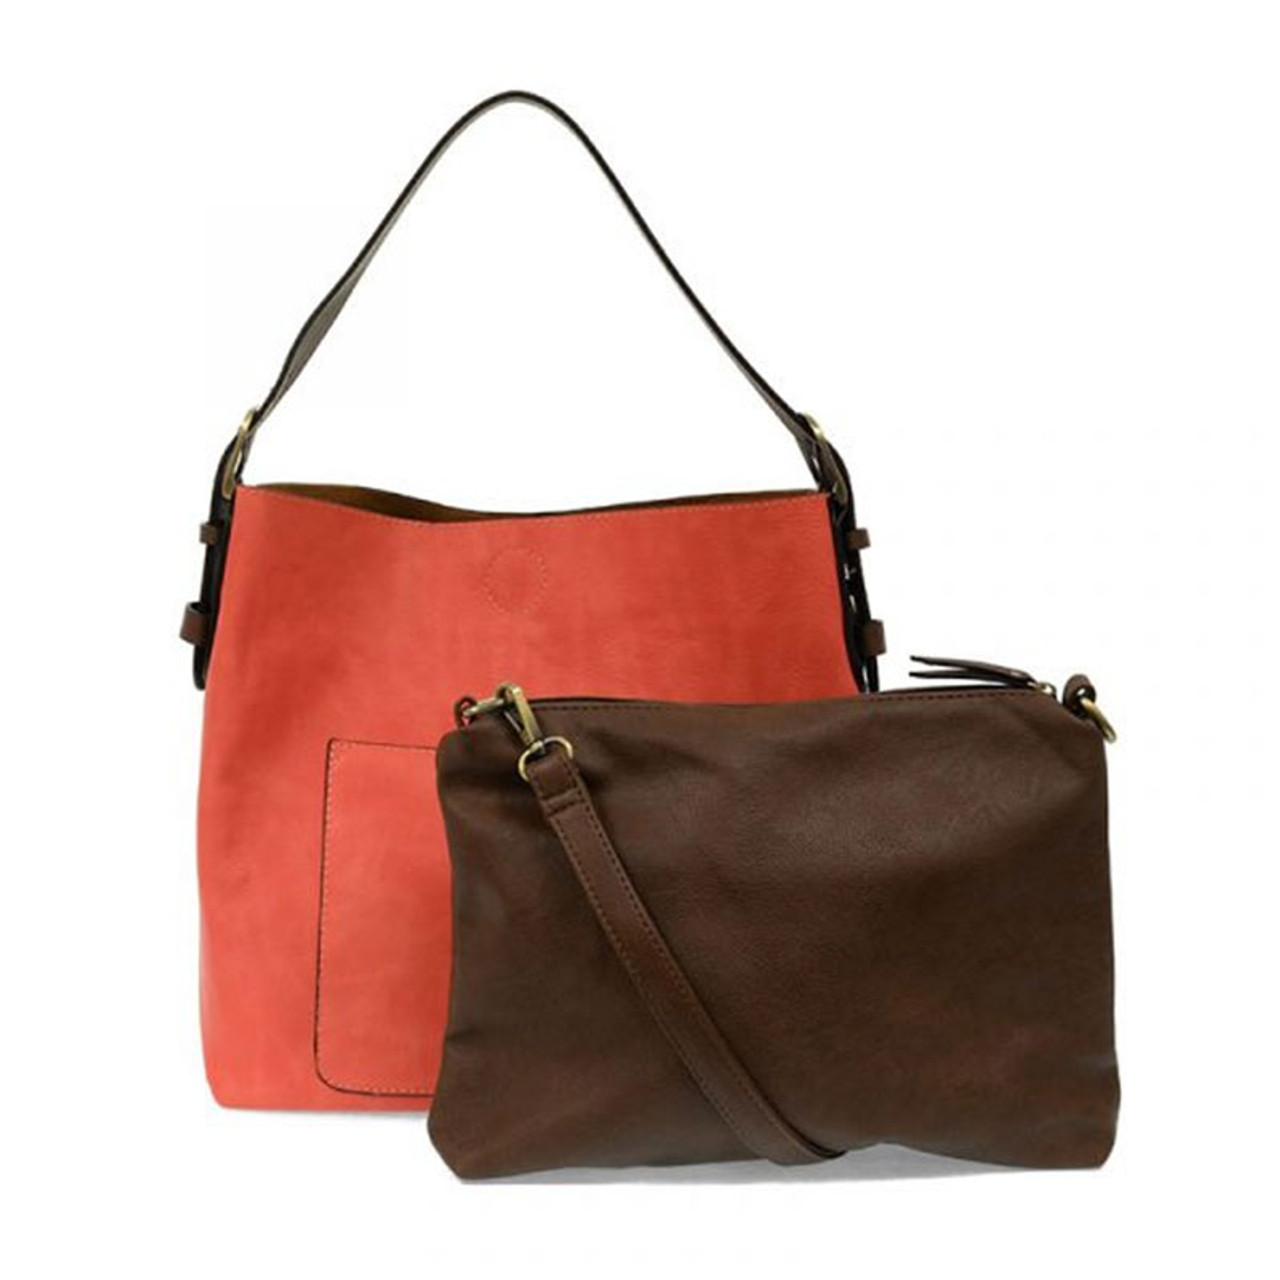 Joy Susan Brown Vegan Leather messenger bag purse | Leather messenger bag,  Purses and bags, Leather messenger